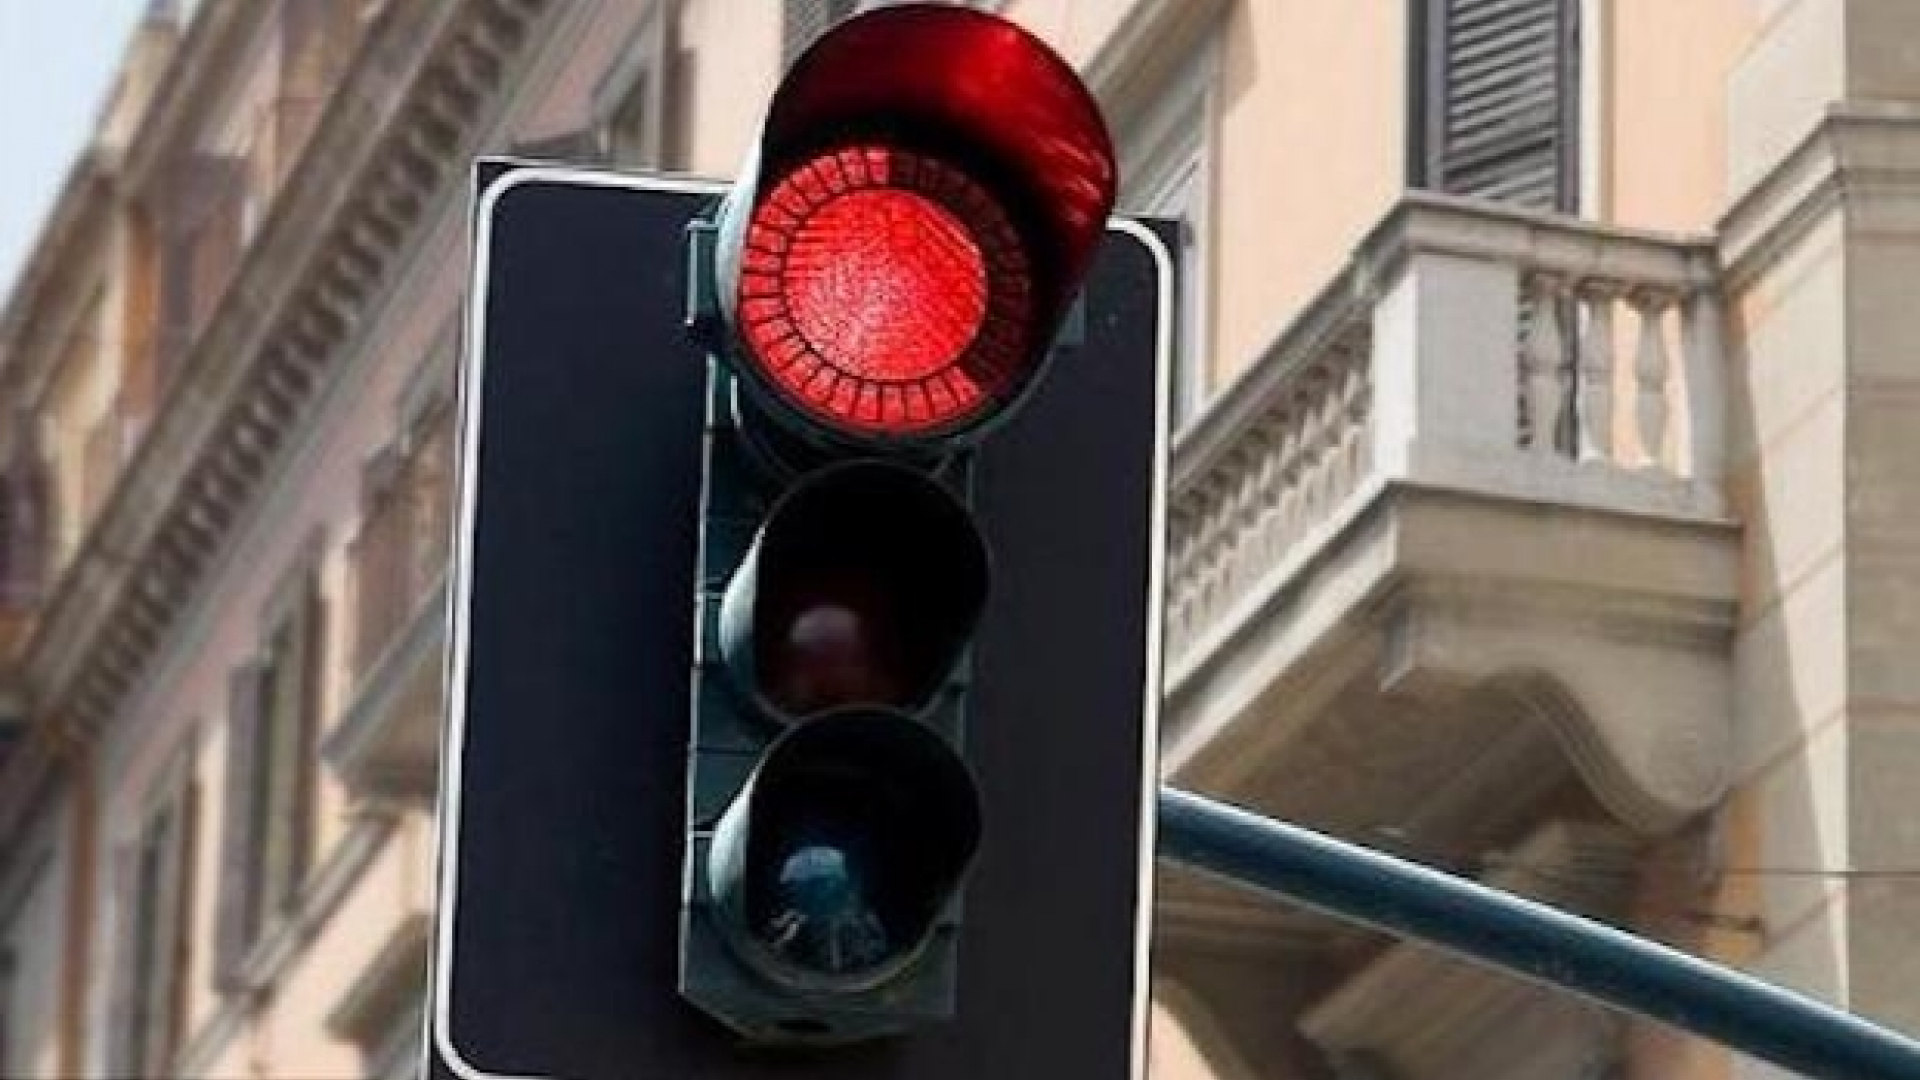 Traffic light red. Светофор. Красный светофор. Красный цвет светофора. Светофор с таймером.